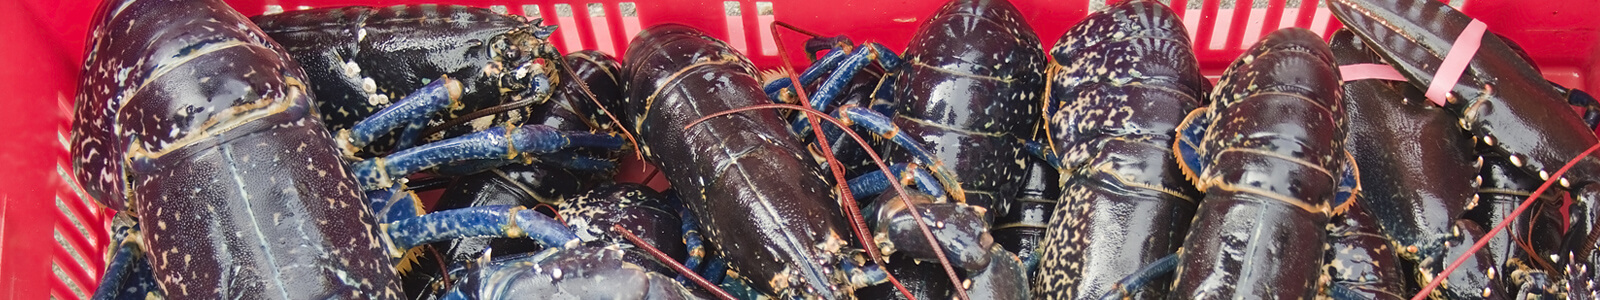 freshly caught lobster in red basket